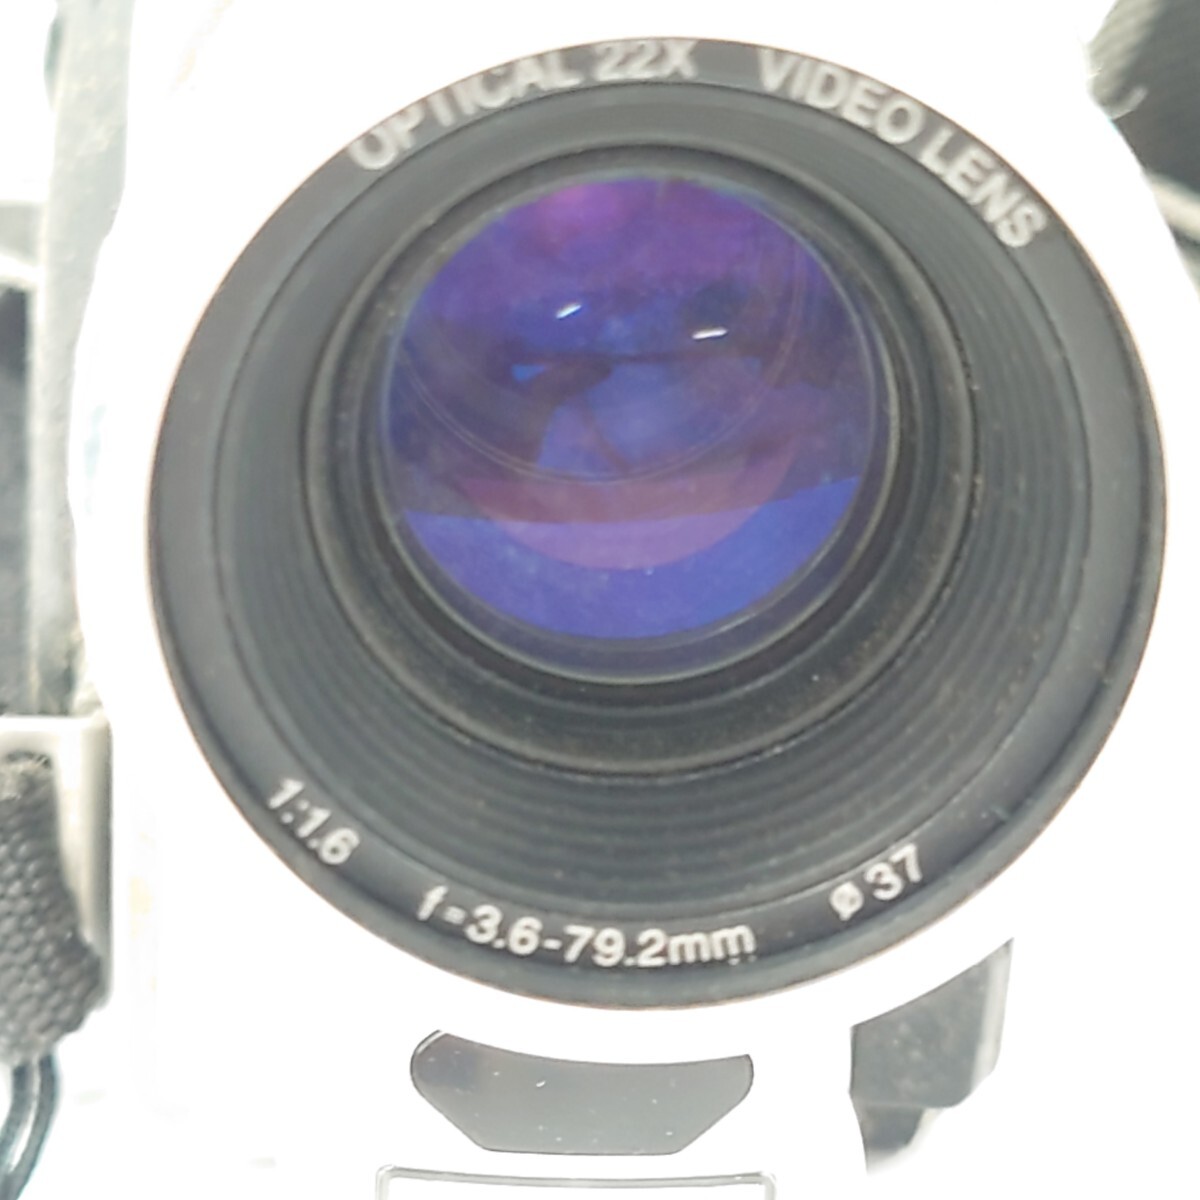 I954 カメラ まとめ SHARP VL-MR1 MINOLTA 7000 Canon EOS 55 ZOOM LENS EF 28-105mm 1:3.5-4.5 デジカメ 中古 ジャンク品 訳あり_画像6